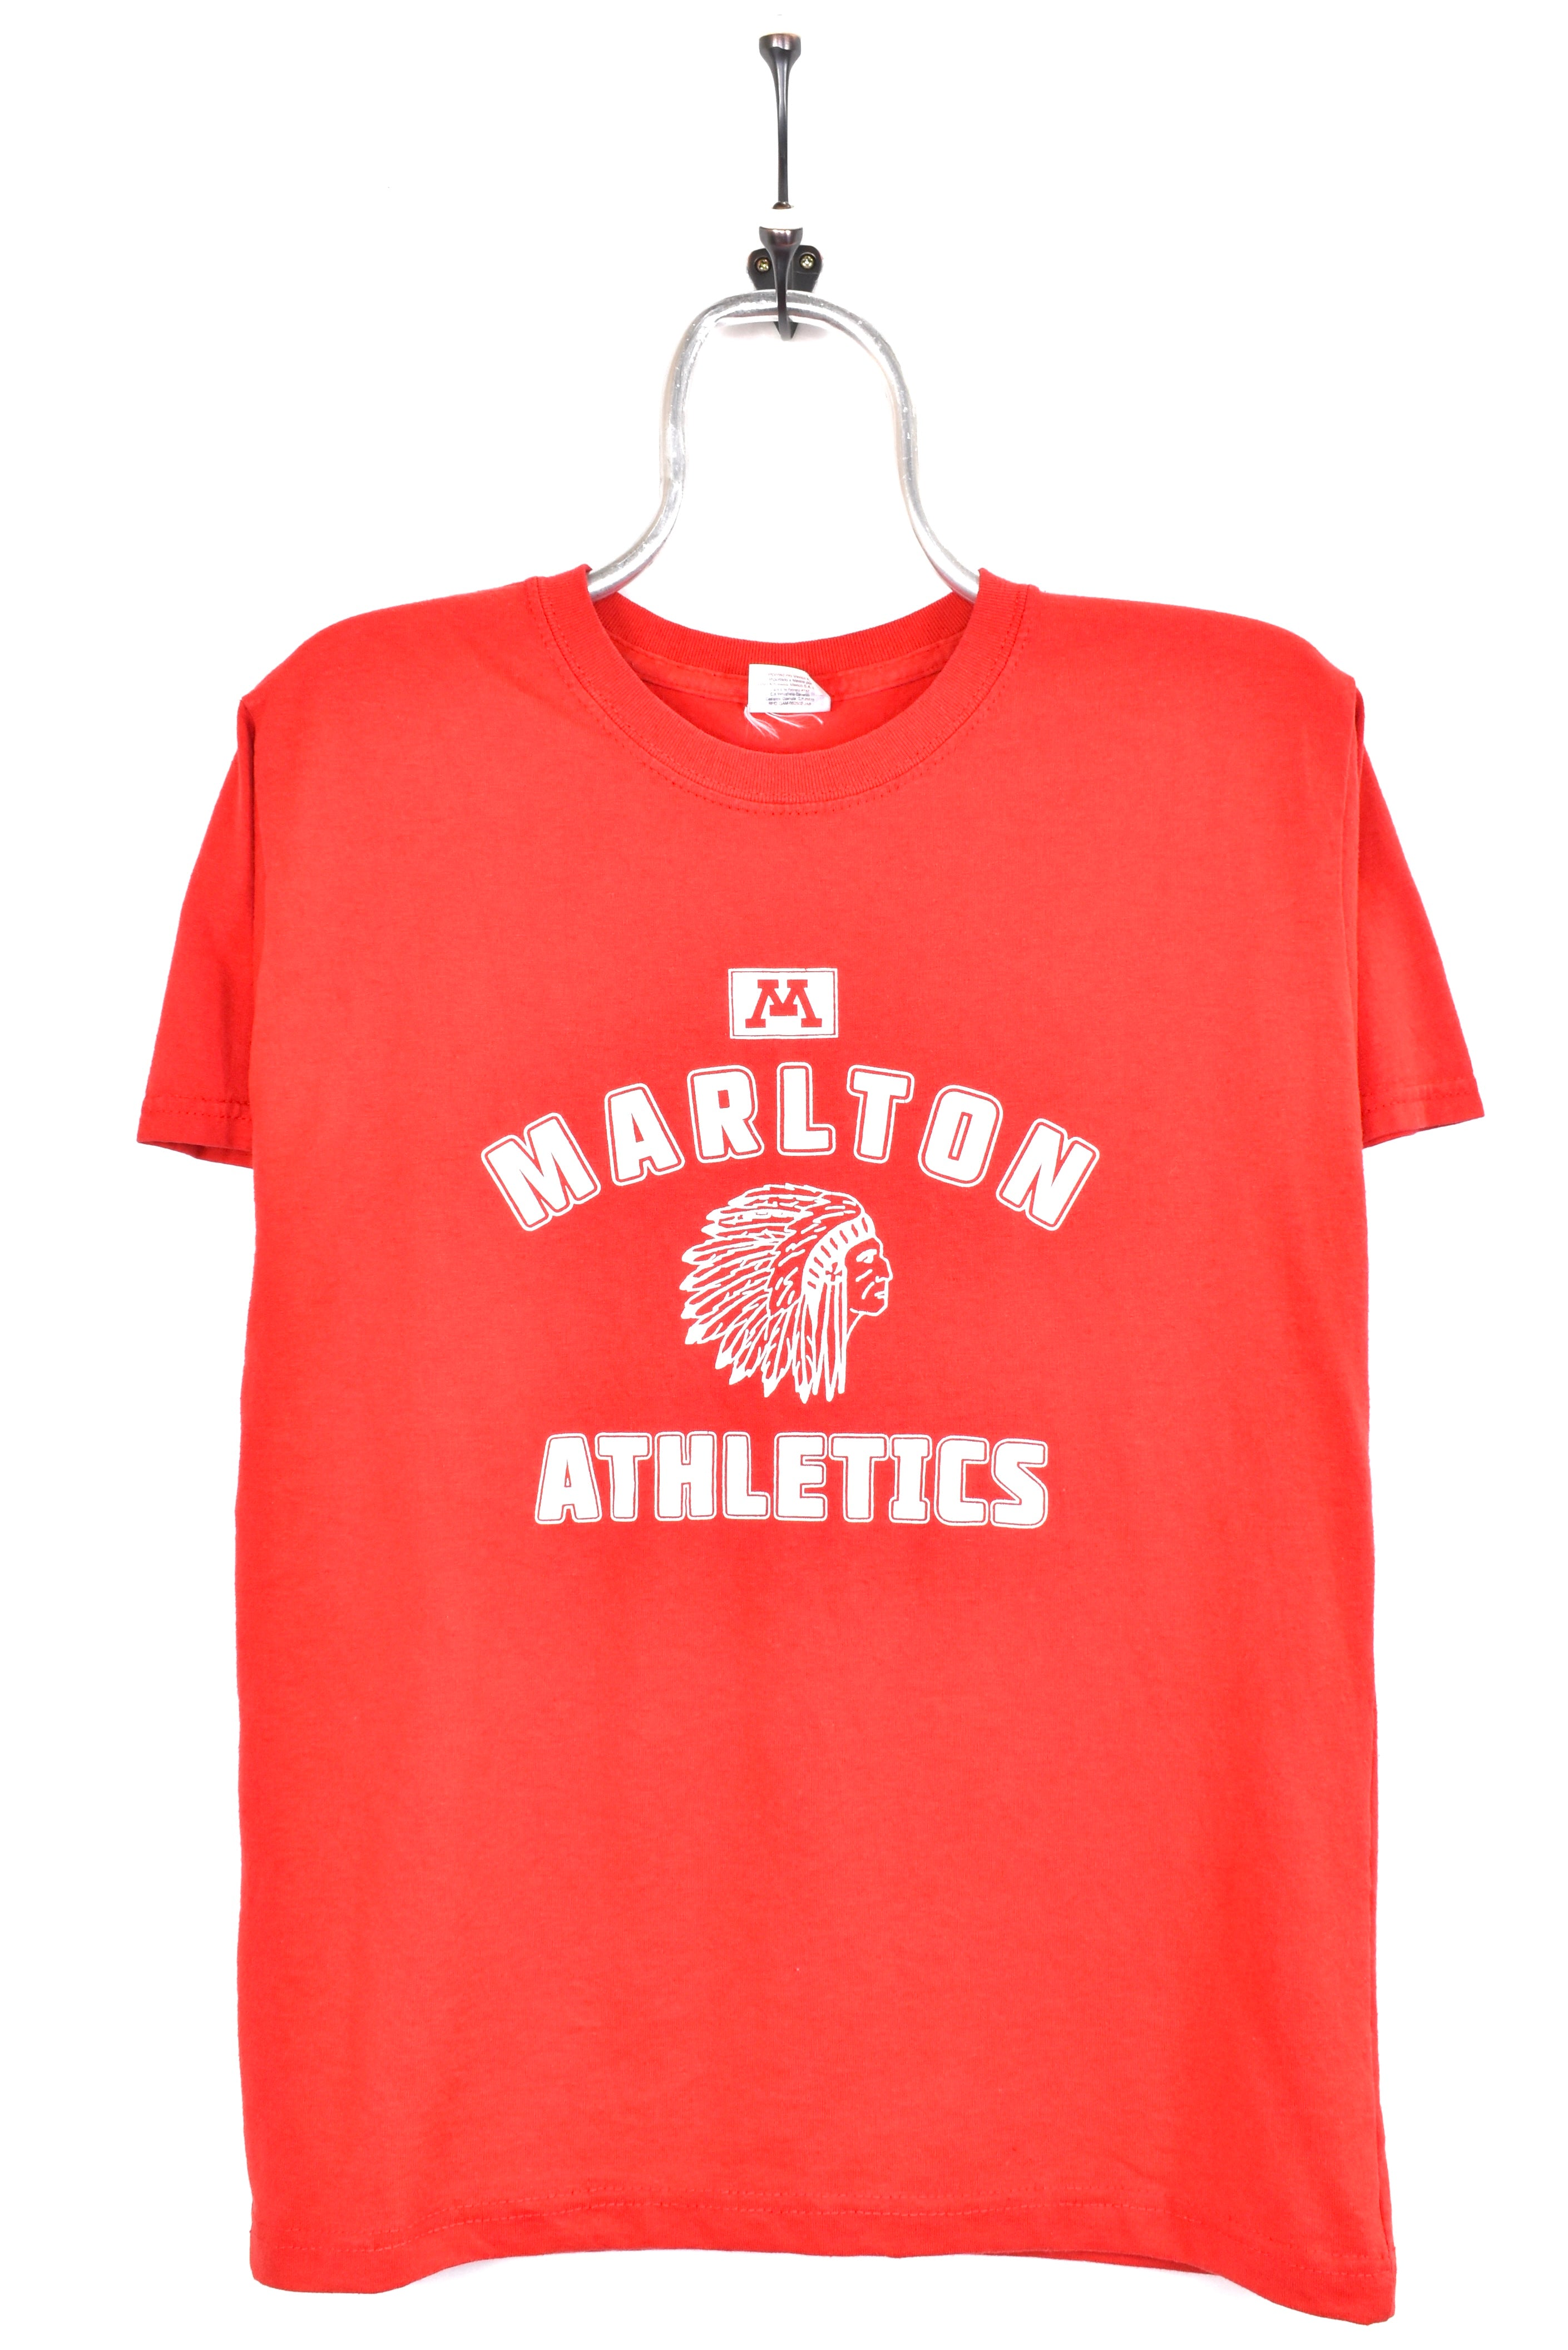 Vintage Marlon athletics shirt, red graphic tee - AU Small COLLEGE